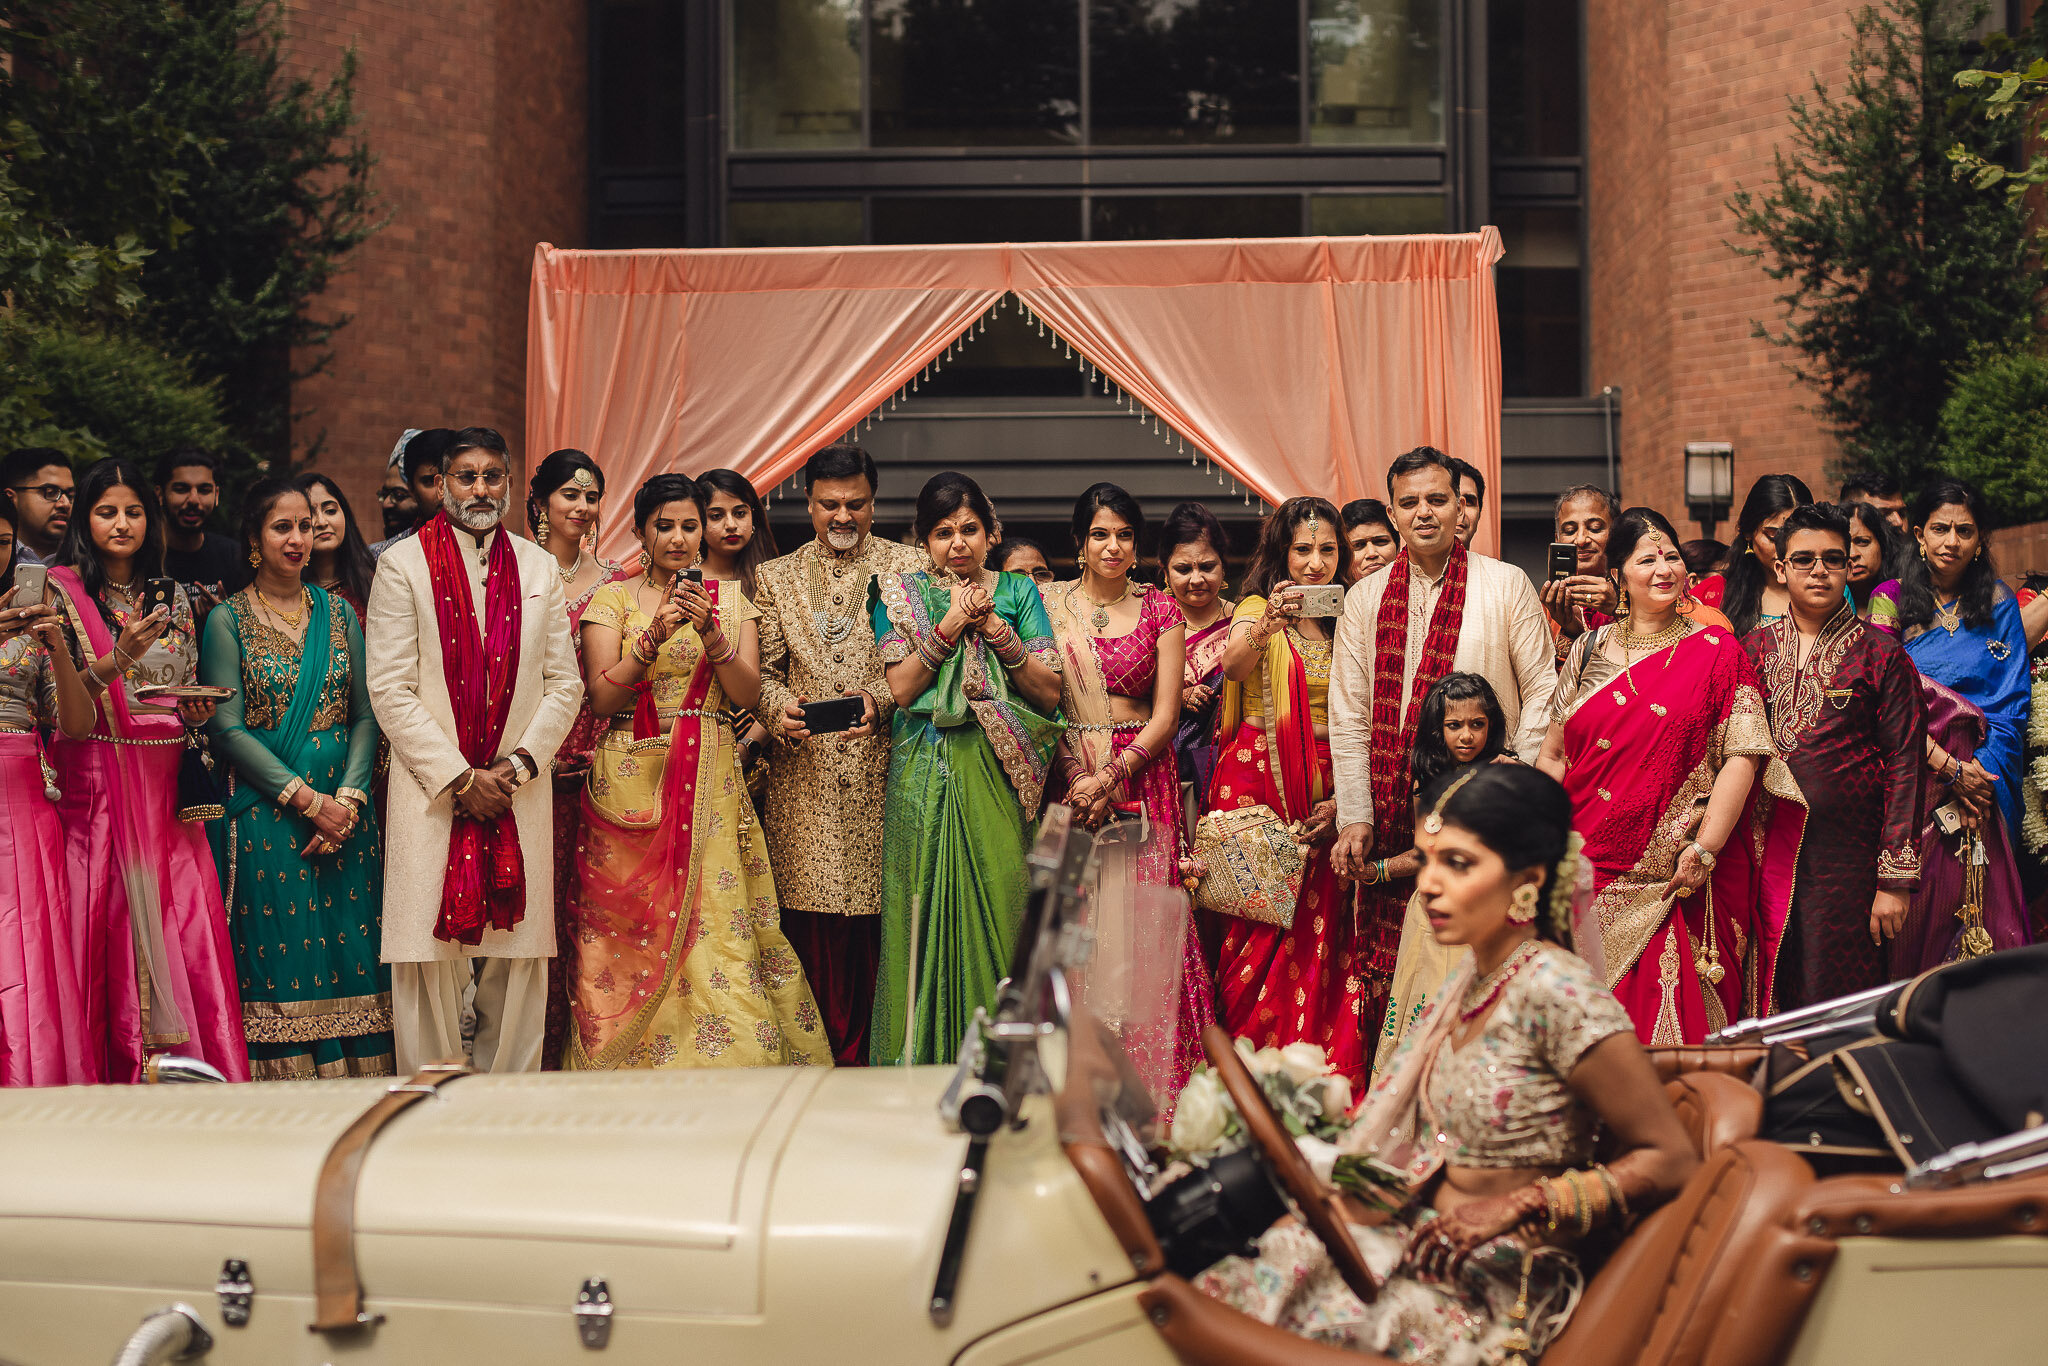 Princeton Hyatt Regency Indian Wedding NY and NJ Premium Indian Wedding Photographer Manish and Sung Photography, Manish Mavani and Sung Kwan Ma  NY NJ INDIAN WEDDING PHOTOGRAPHER